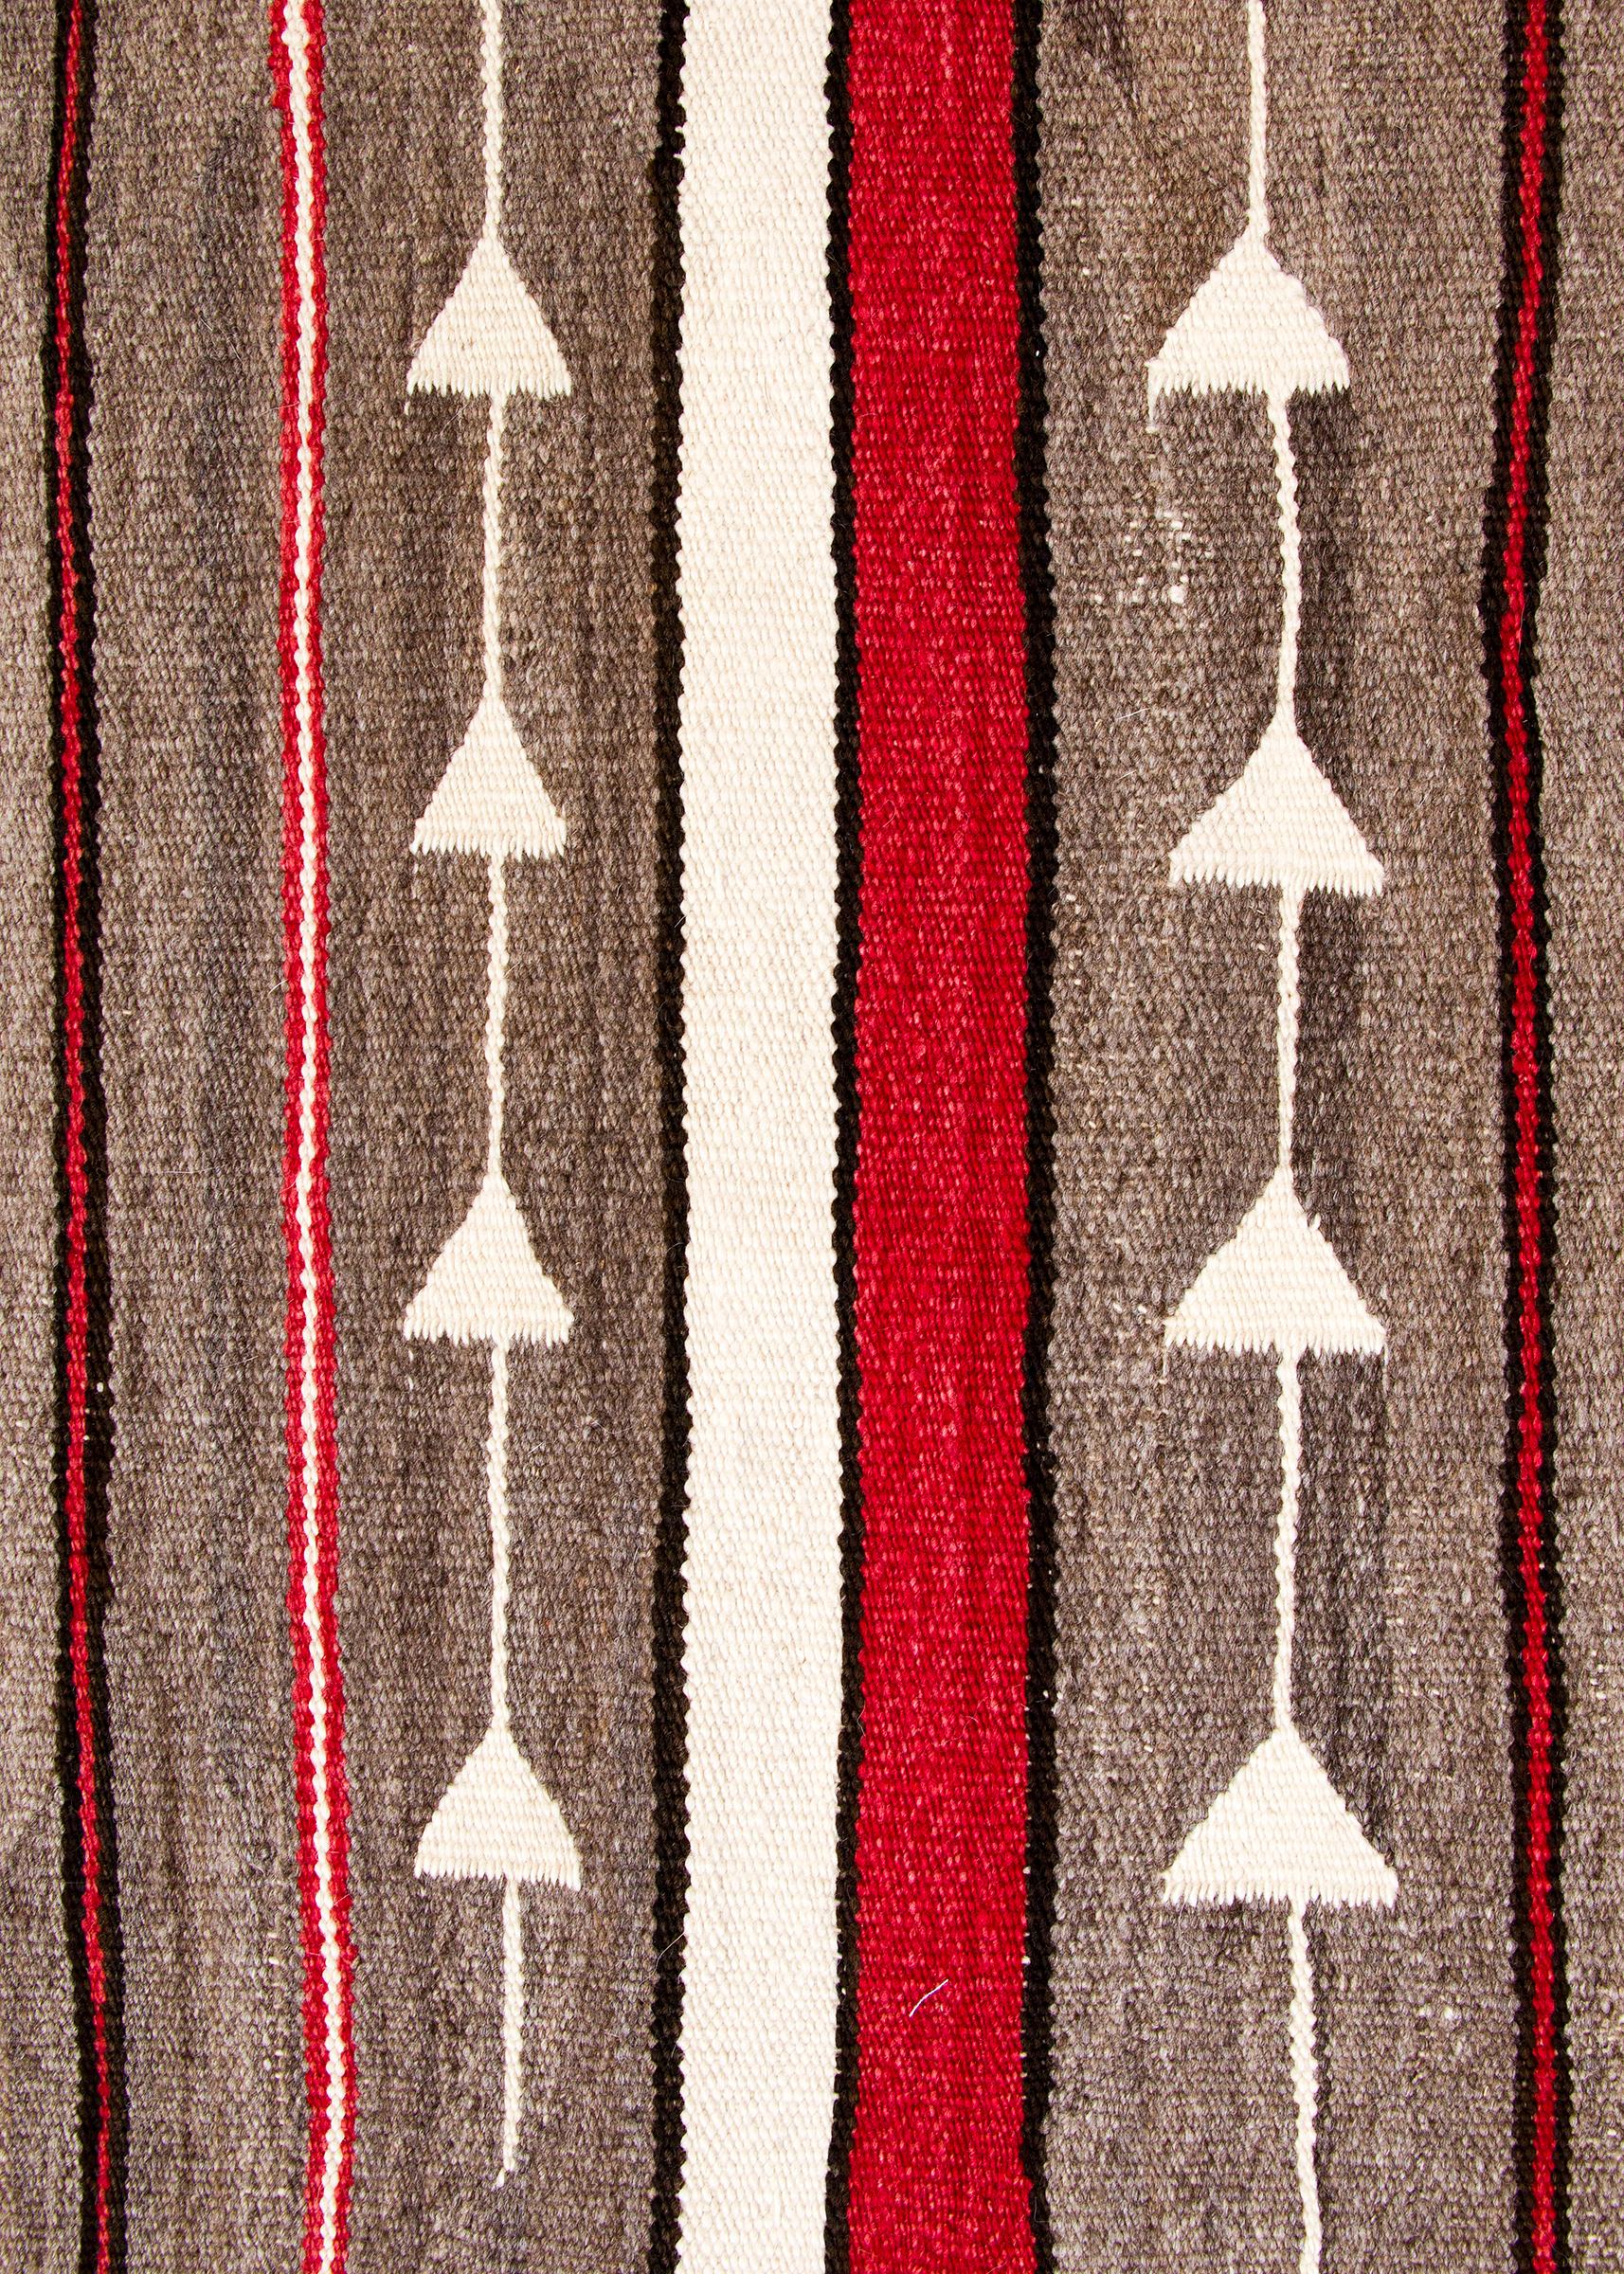 American Vintage Navajo Rug, Pictorial Yei Weaving circa 1920s-1930s Southwestern Textile